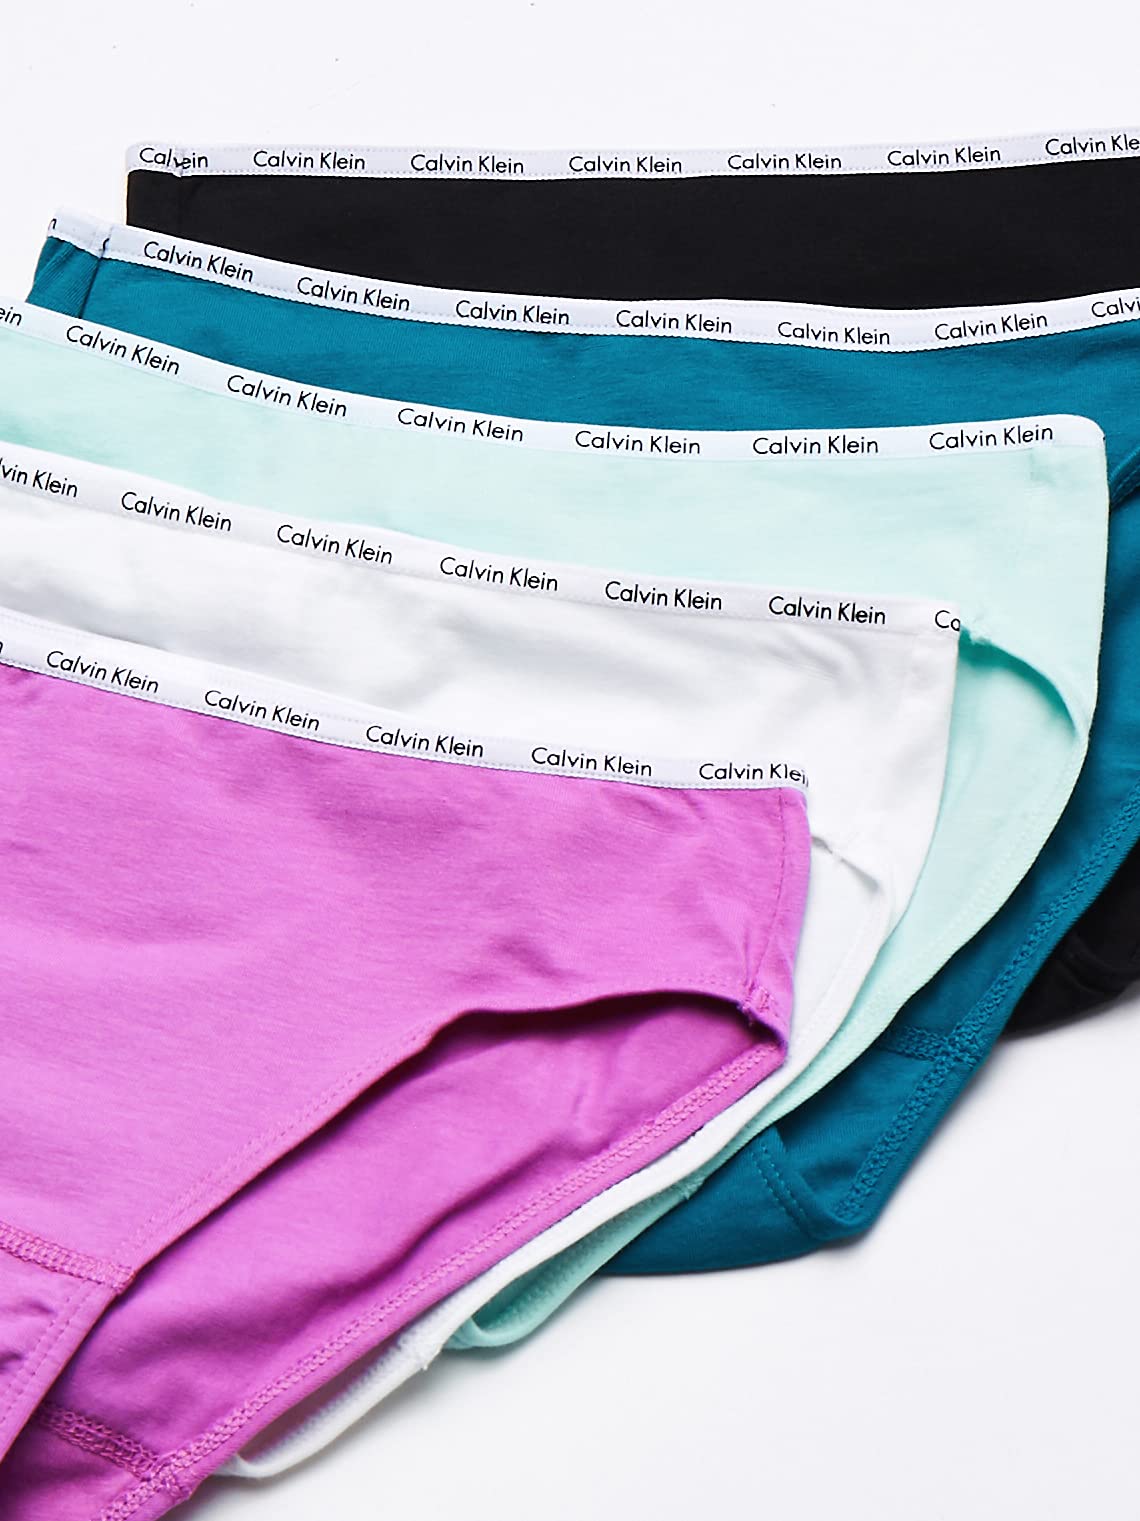 Calvin Klein Women’s Cotton Stretch Logo Bikini Panties, Multipack